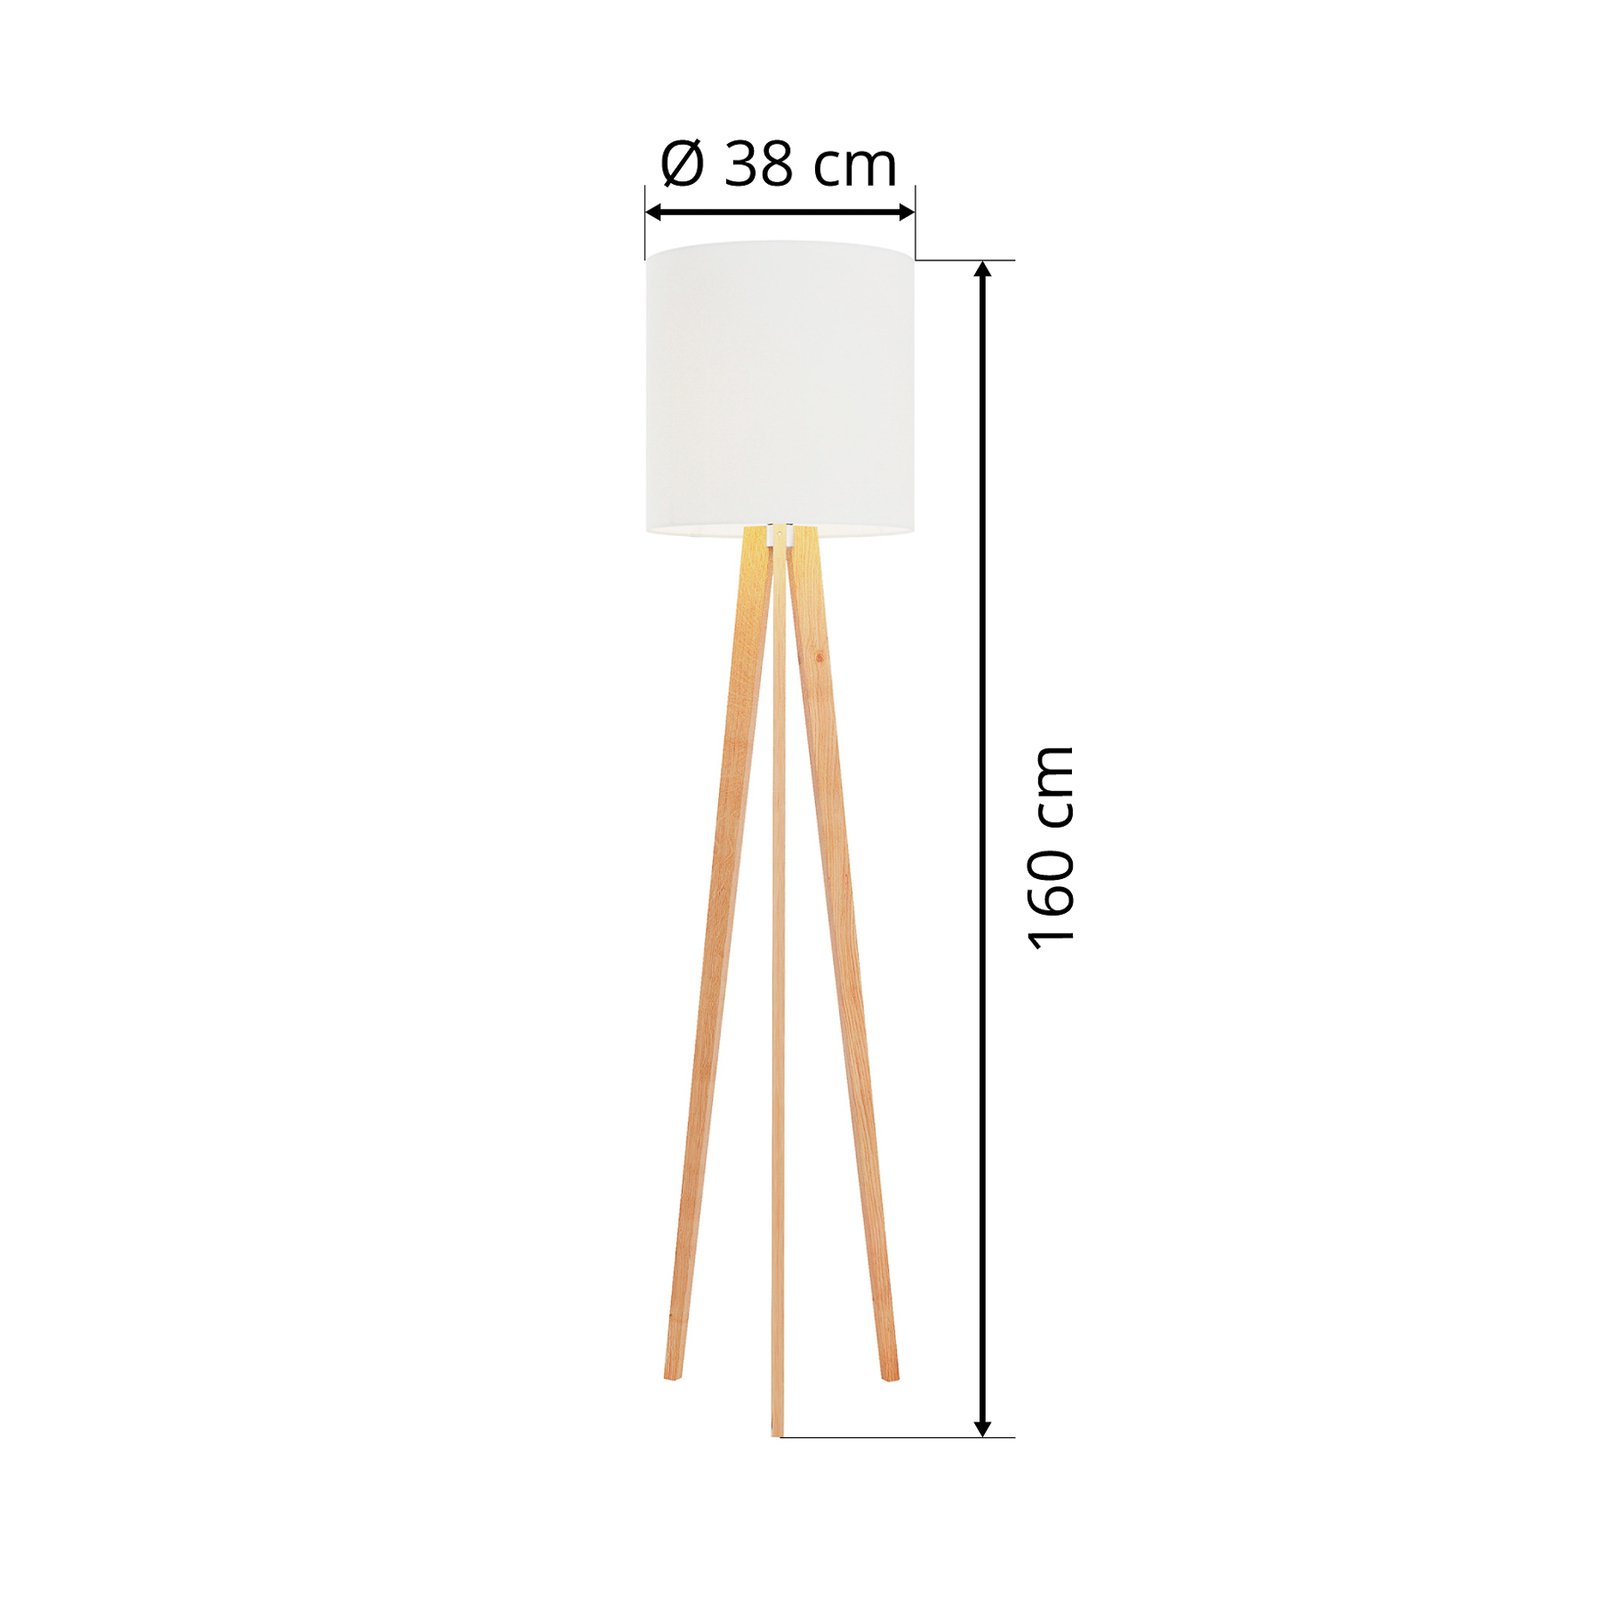 Quitani floor lamp Nida, wooden frame, white lampshade